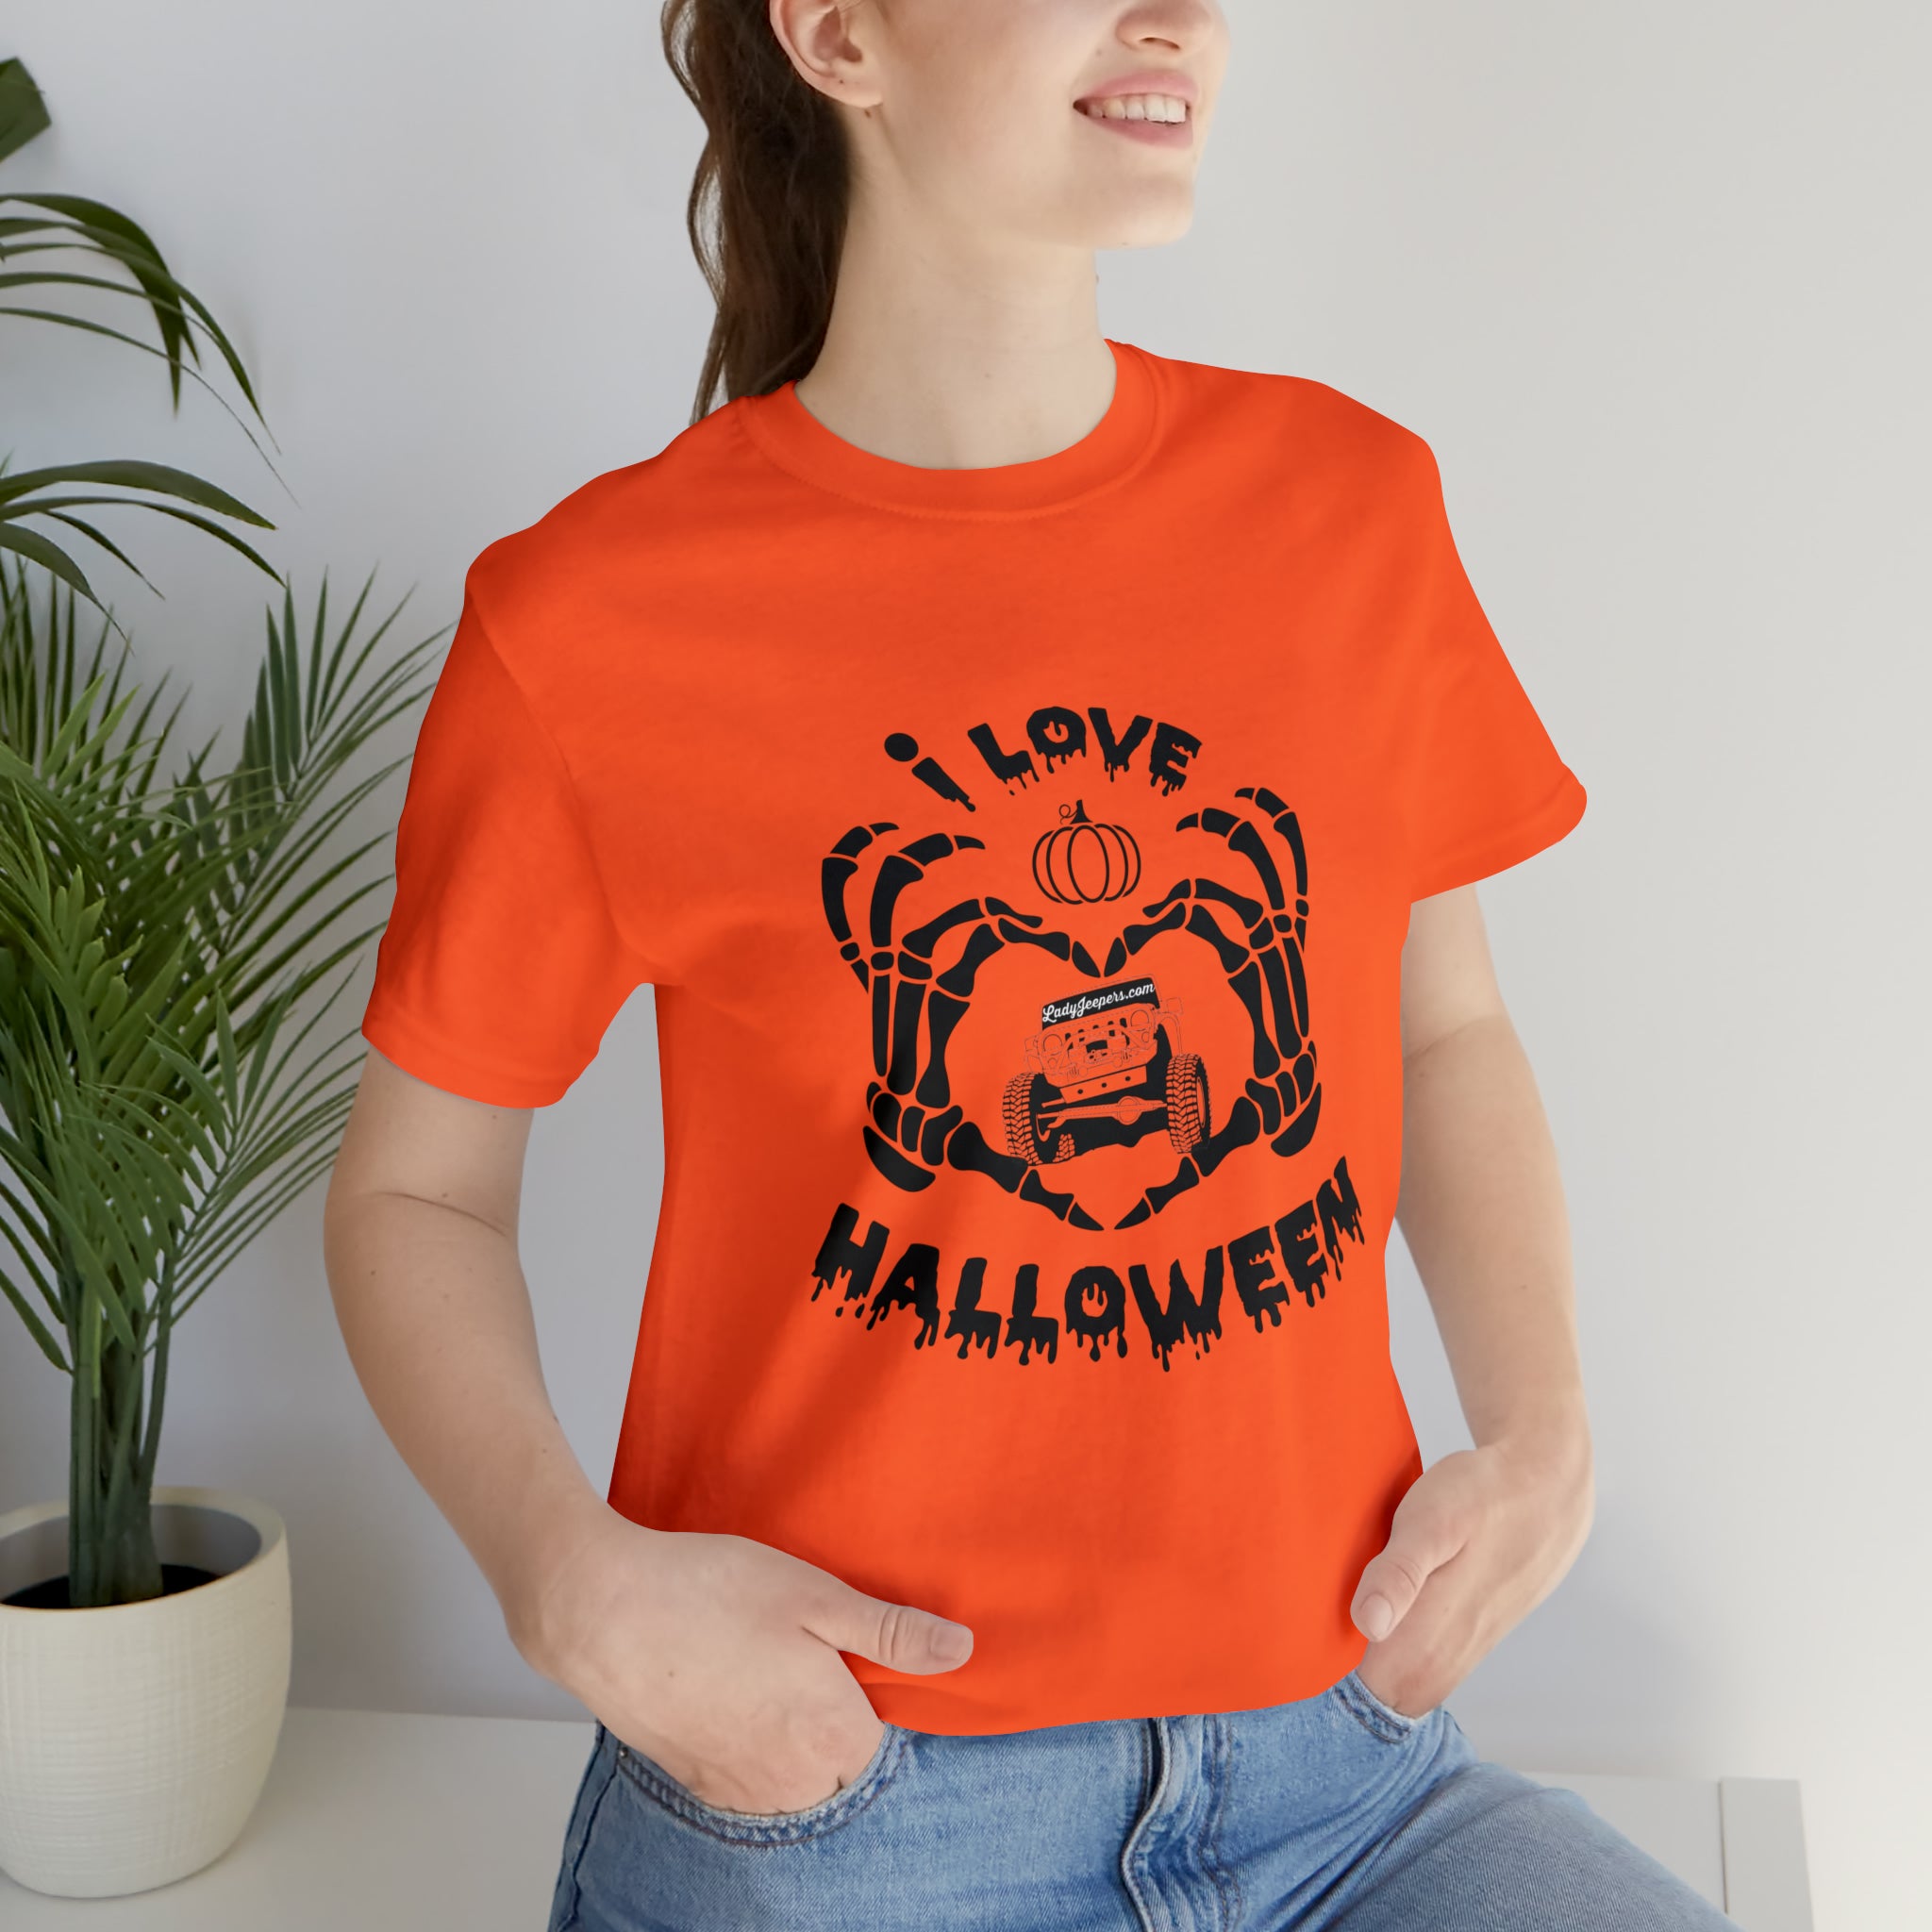 I Love Halloween T-Shirt